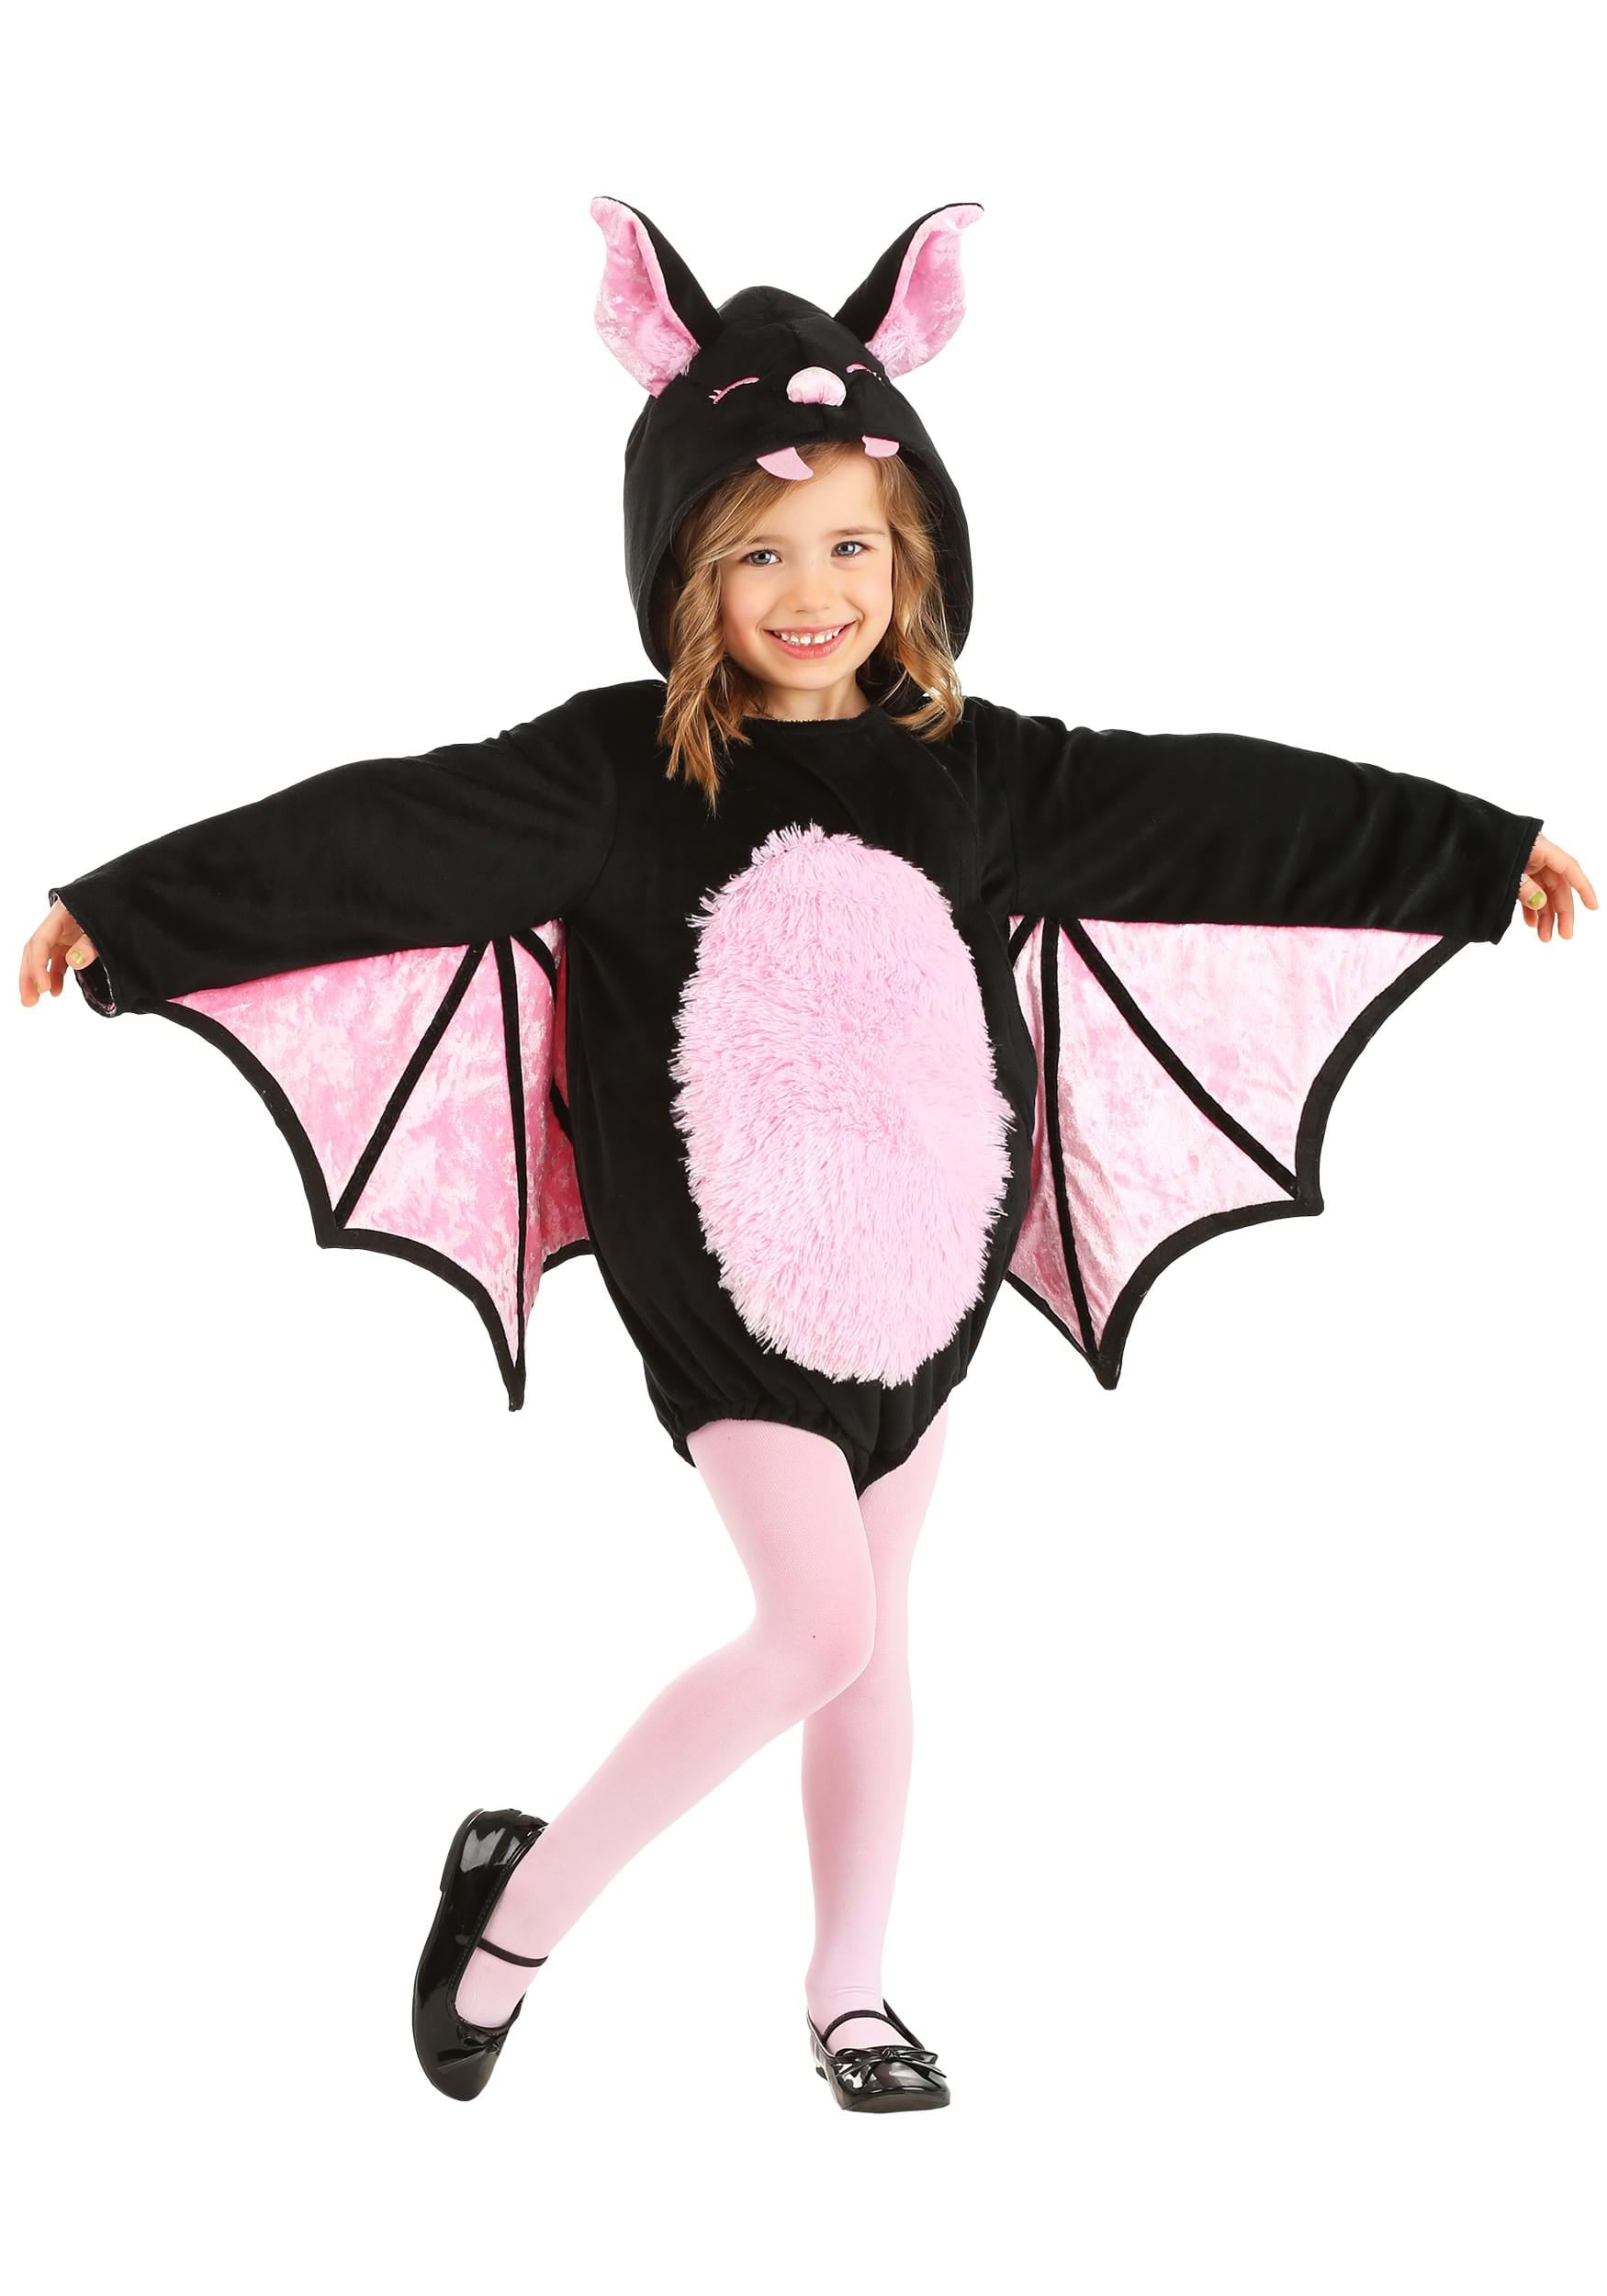 Kids bat costume